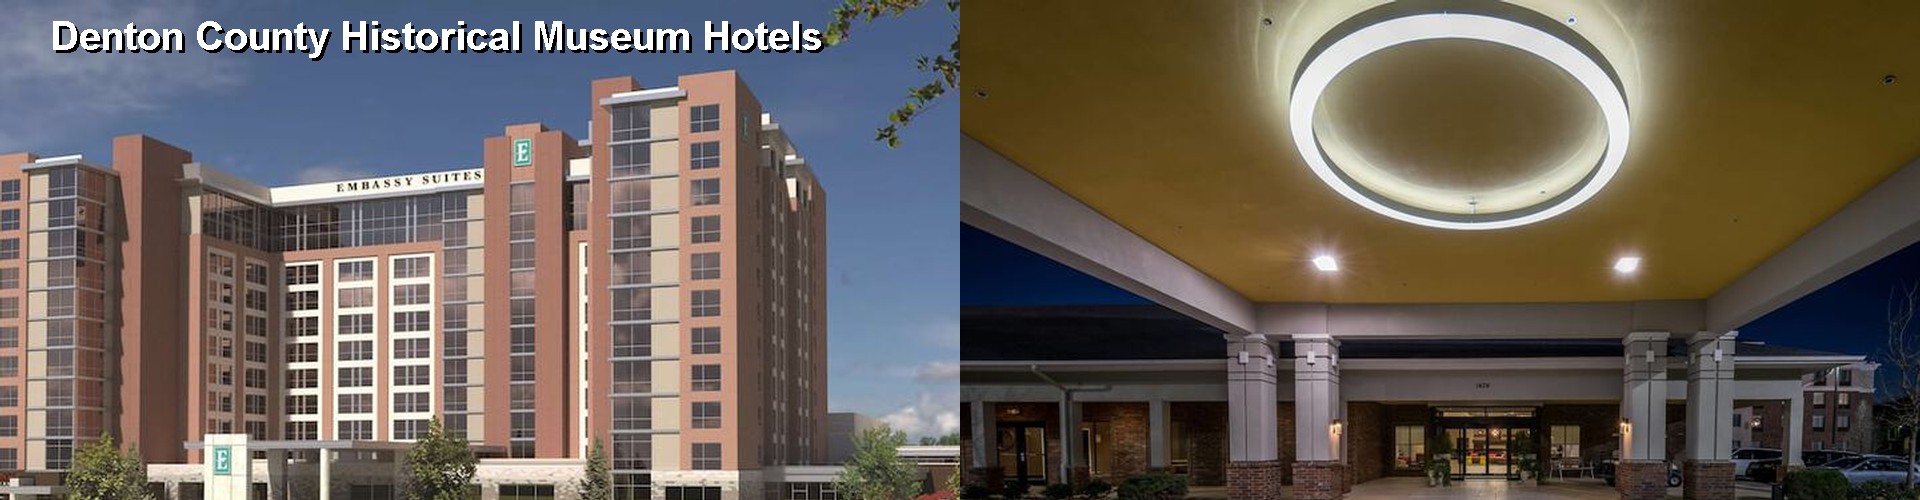 5 Best Hotels near Denton County Historical Museum